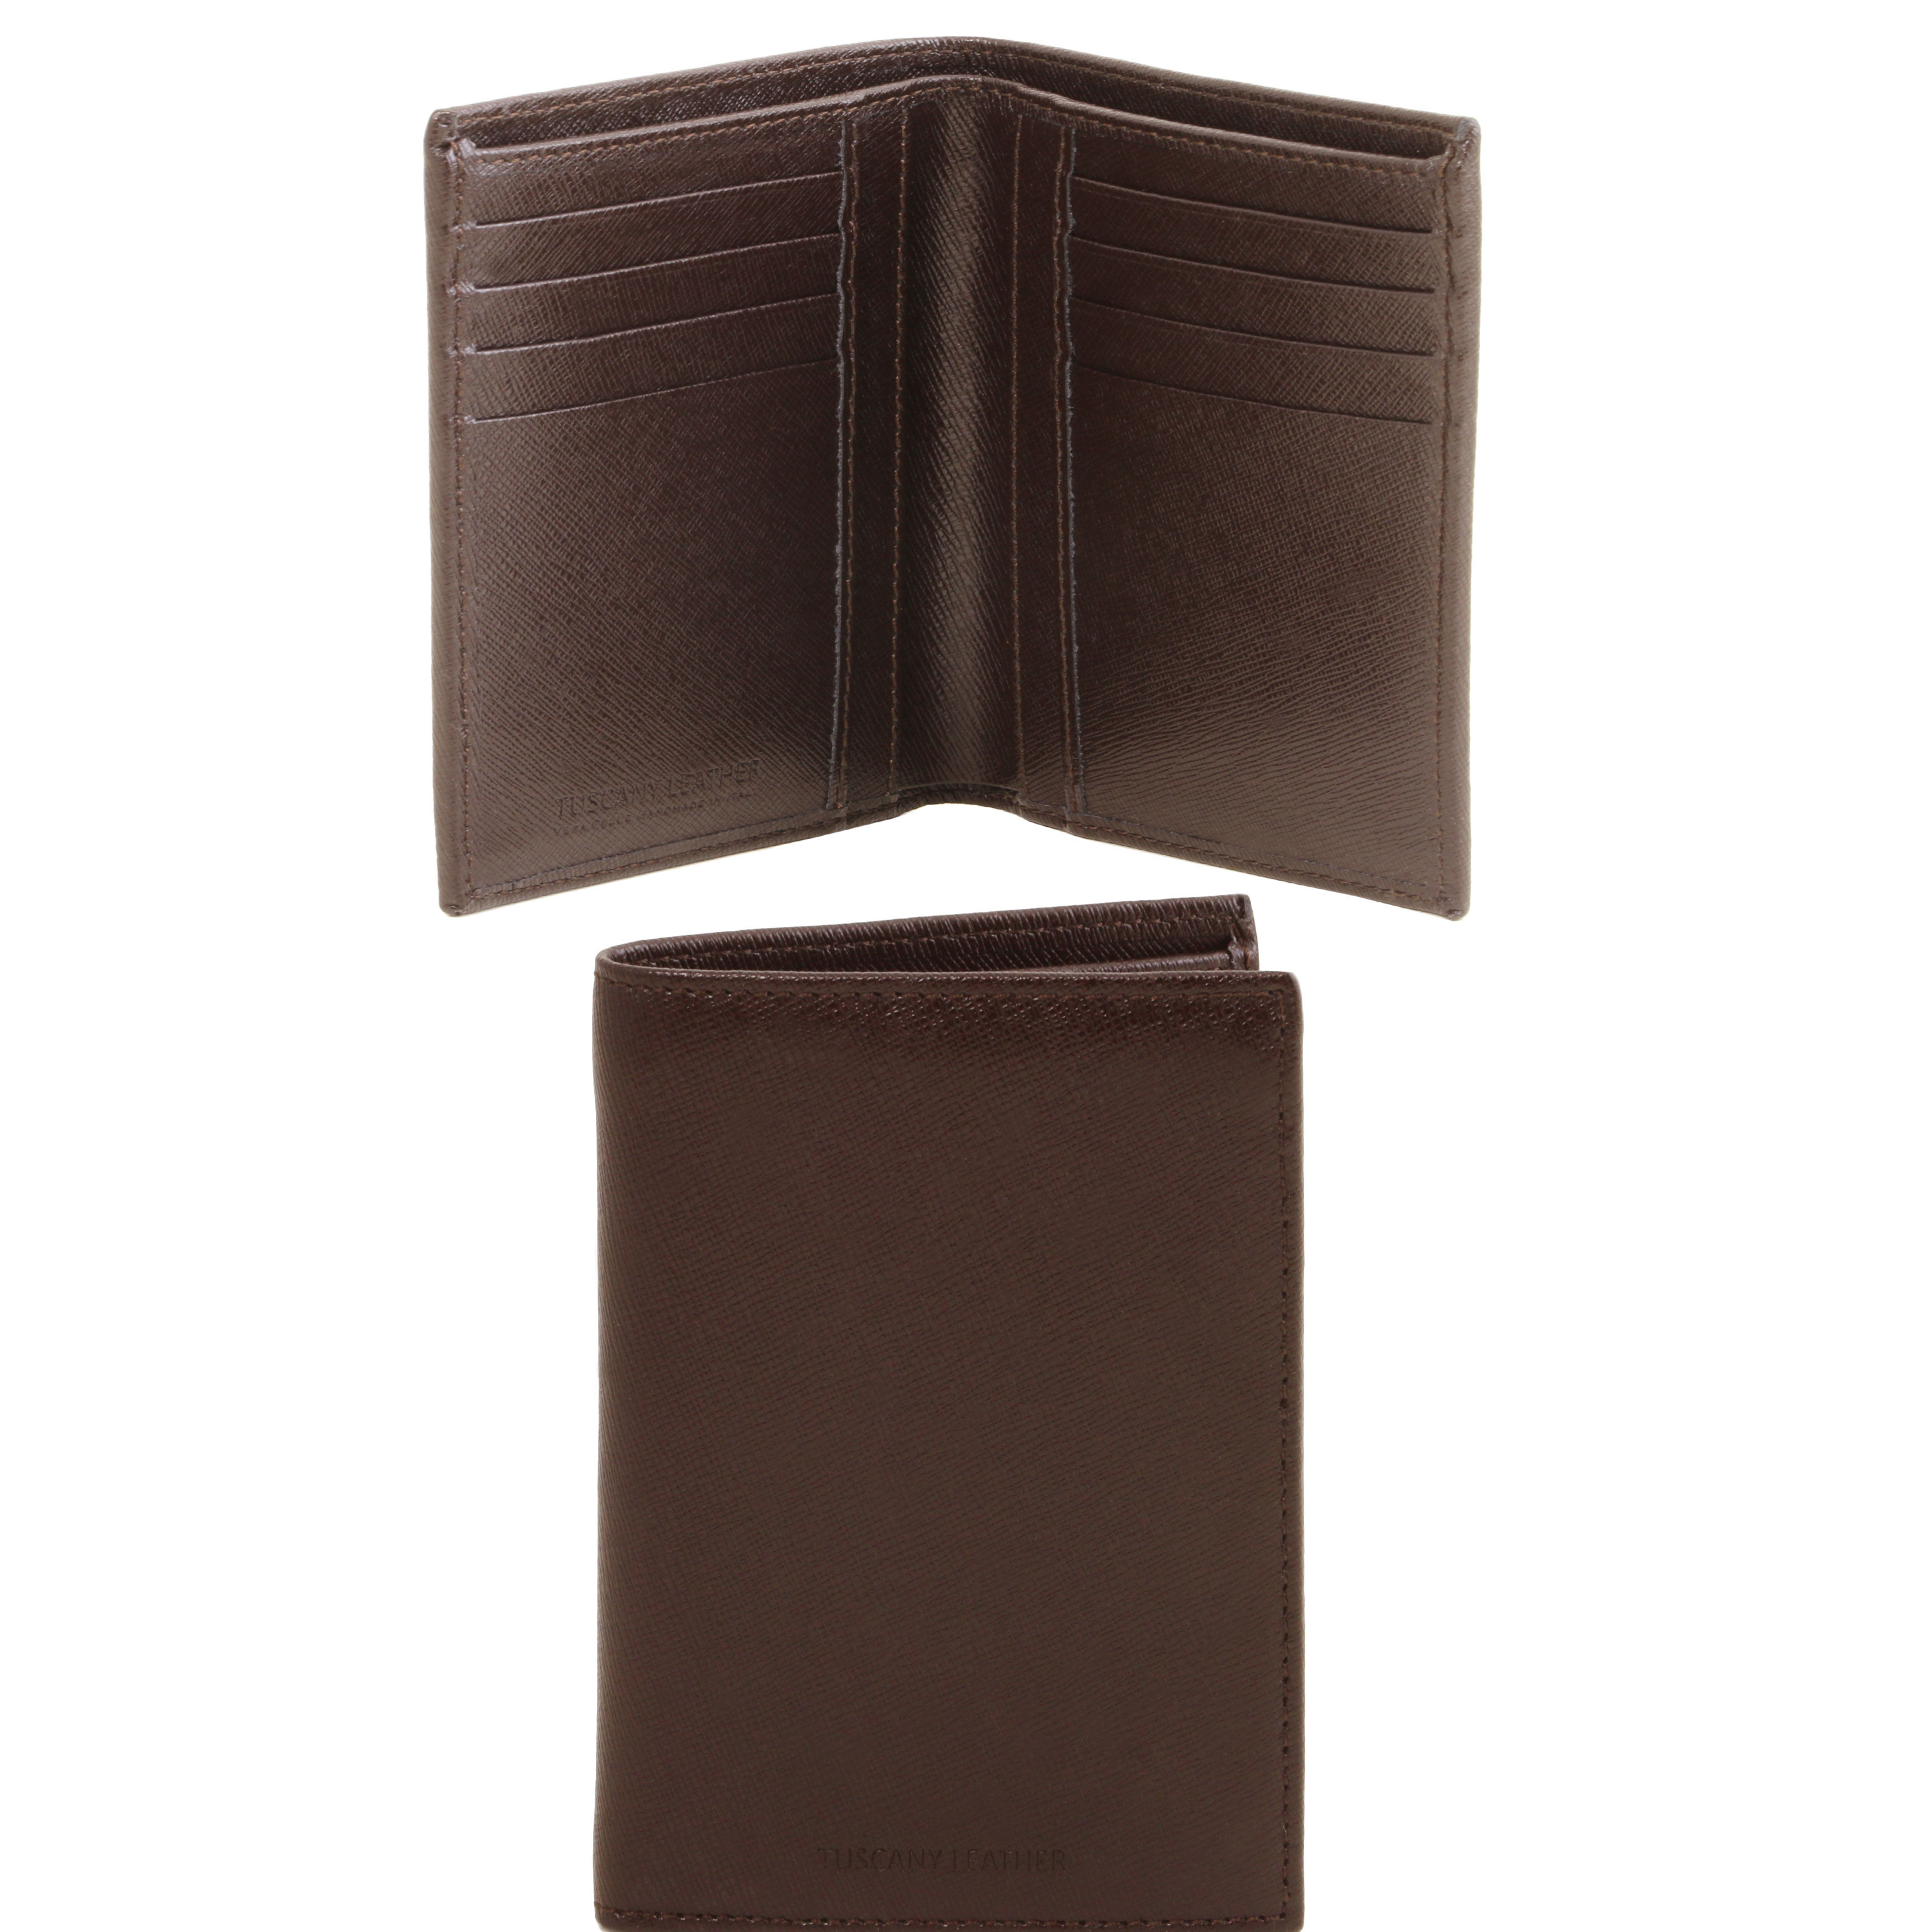 Portofel Tuscany Leather din piele maro inchis vertical 2 fold